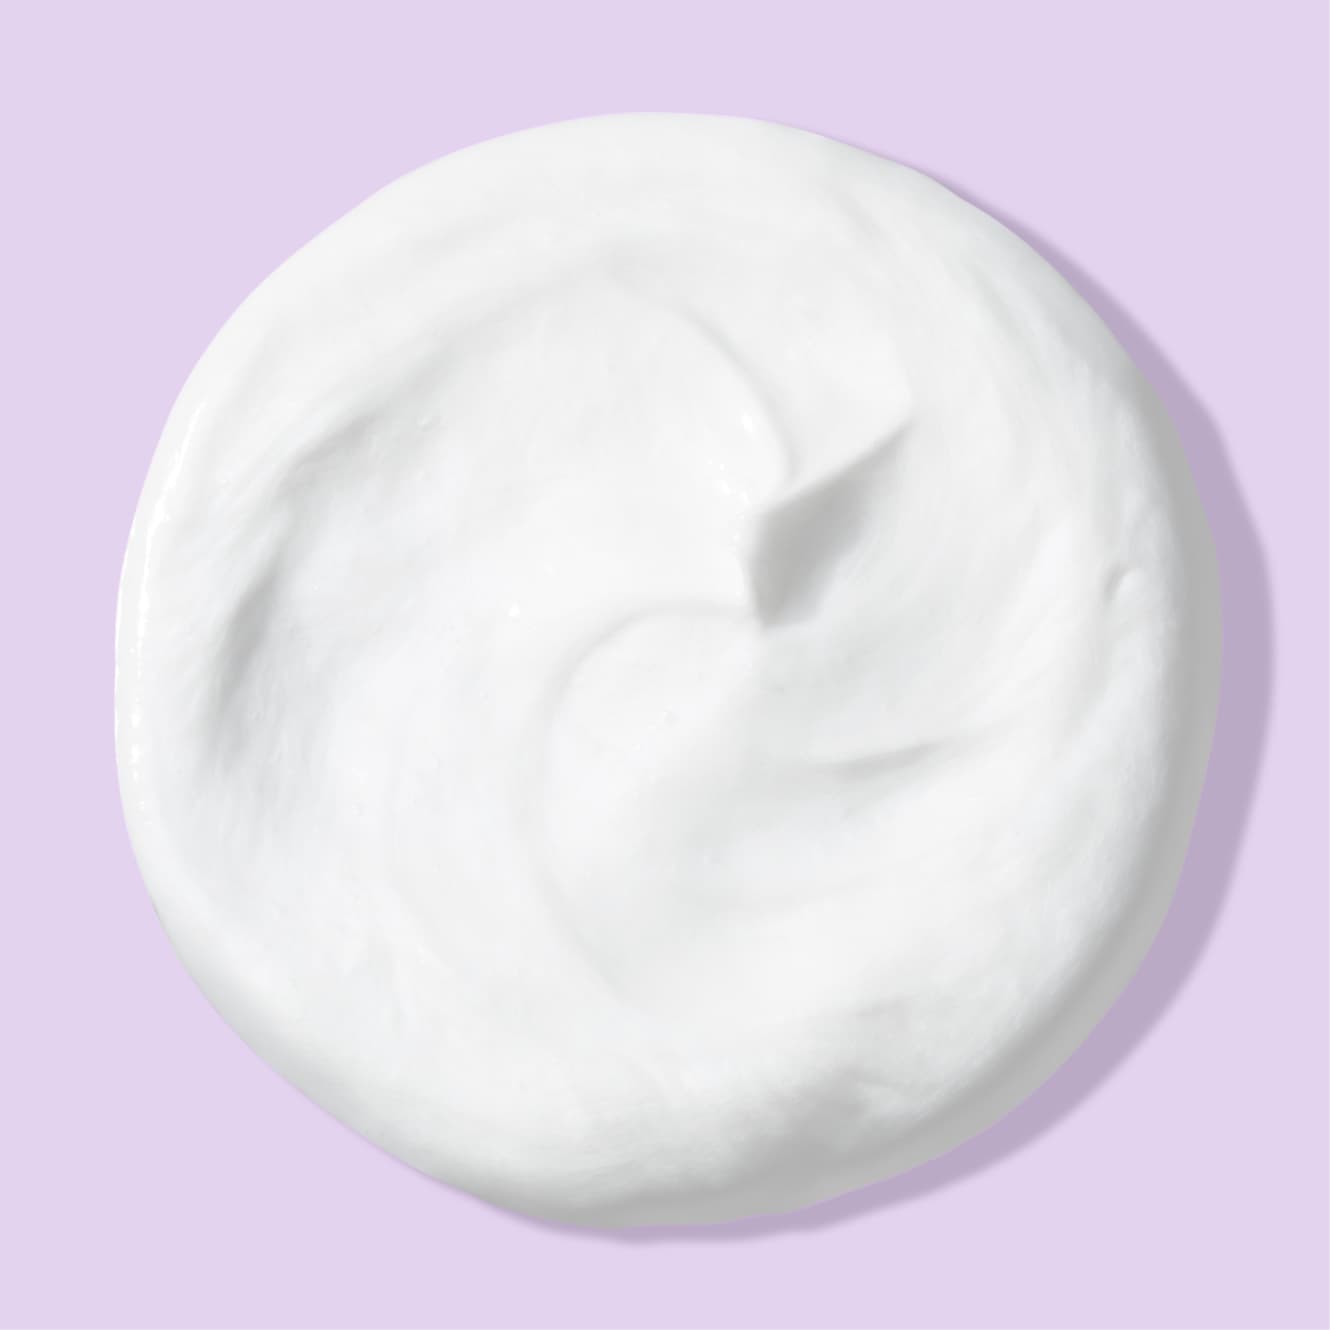 White blob of deep action cream cleanser for sensitive skin over light purple background